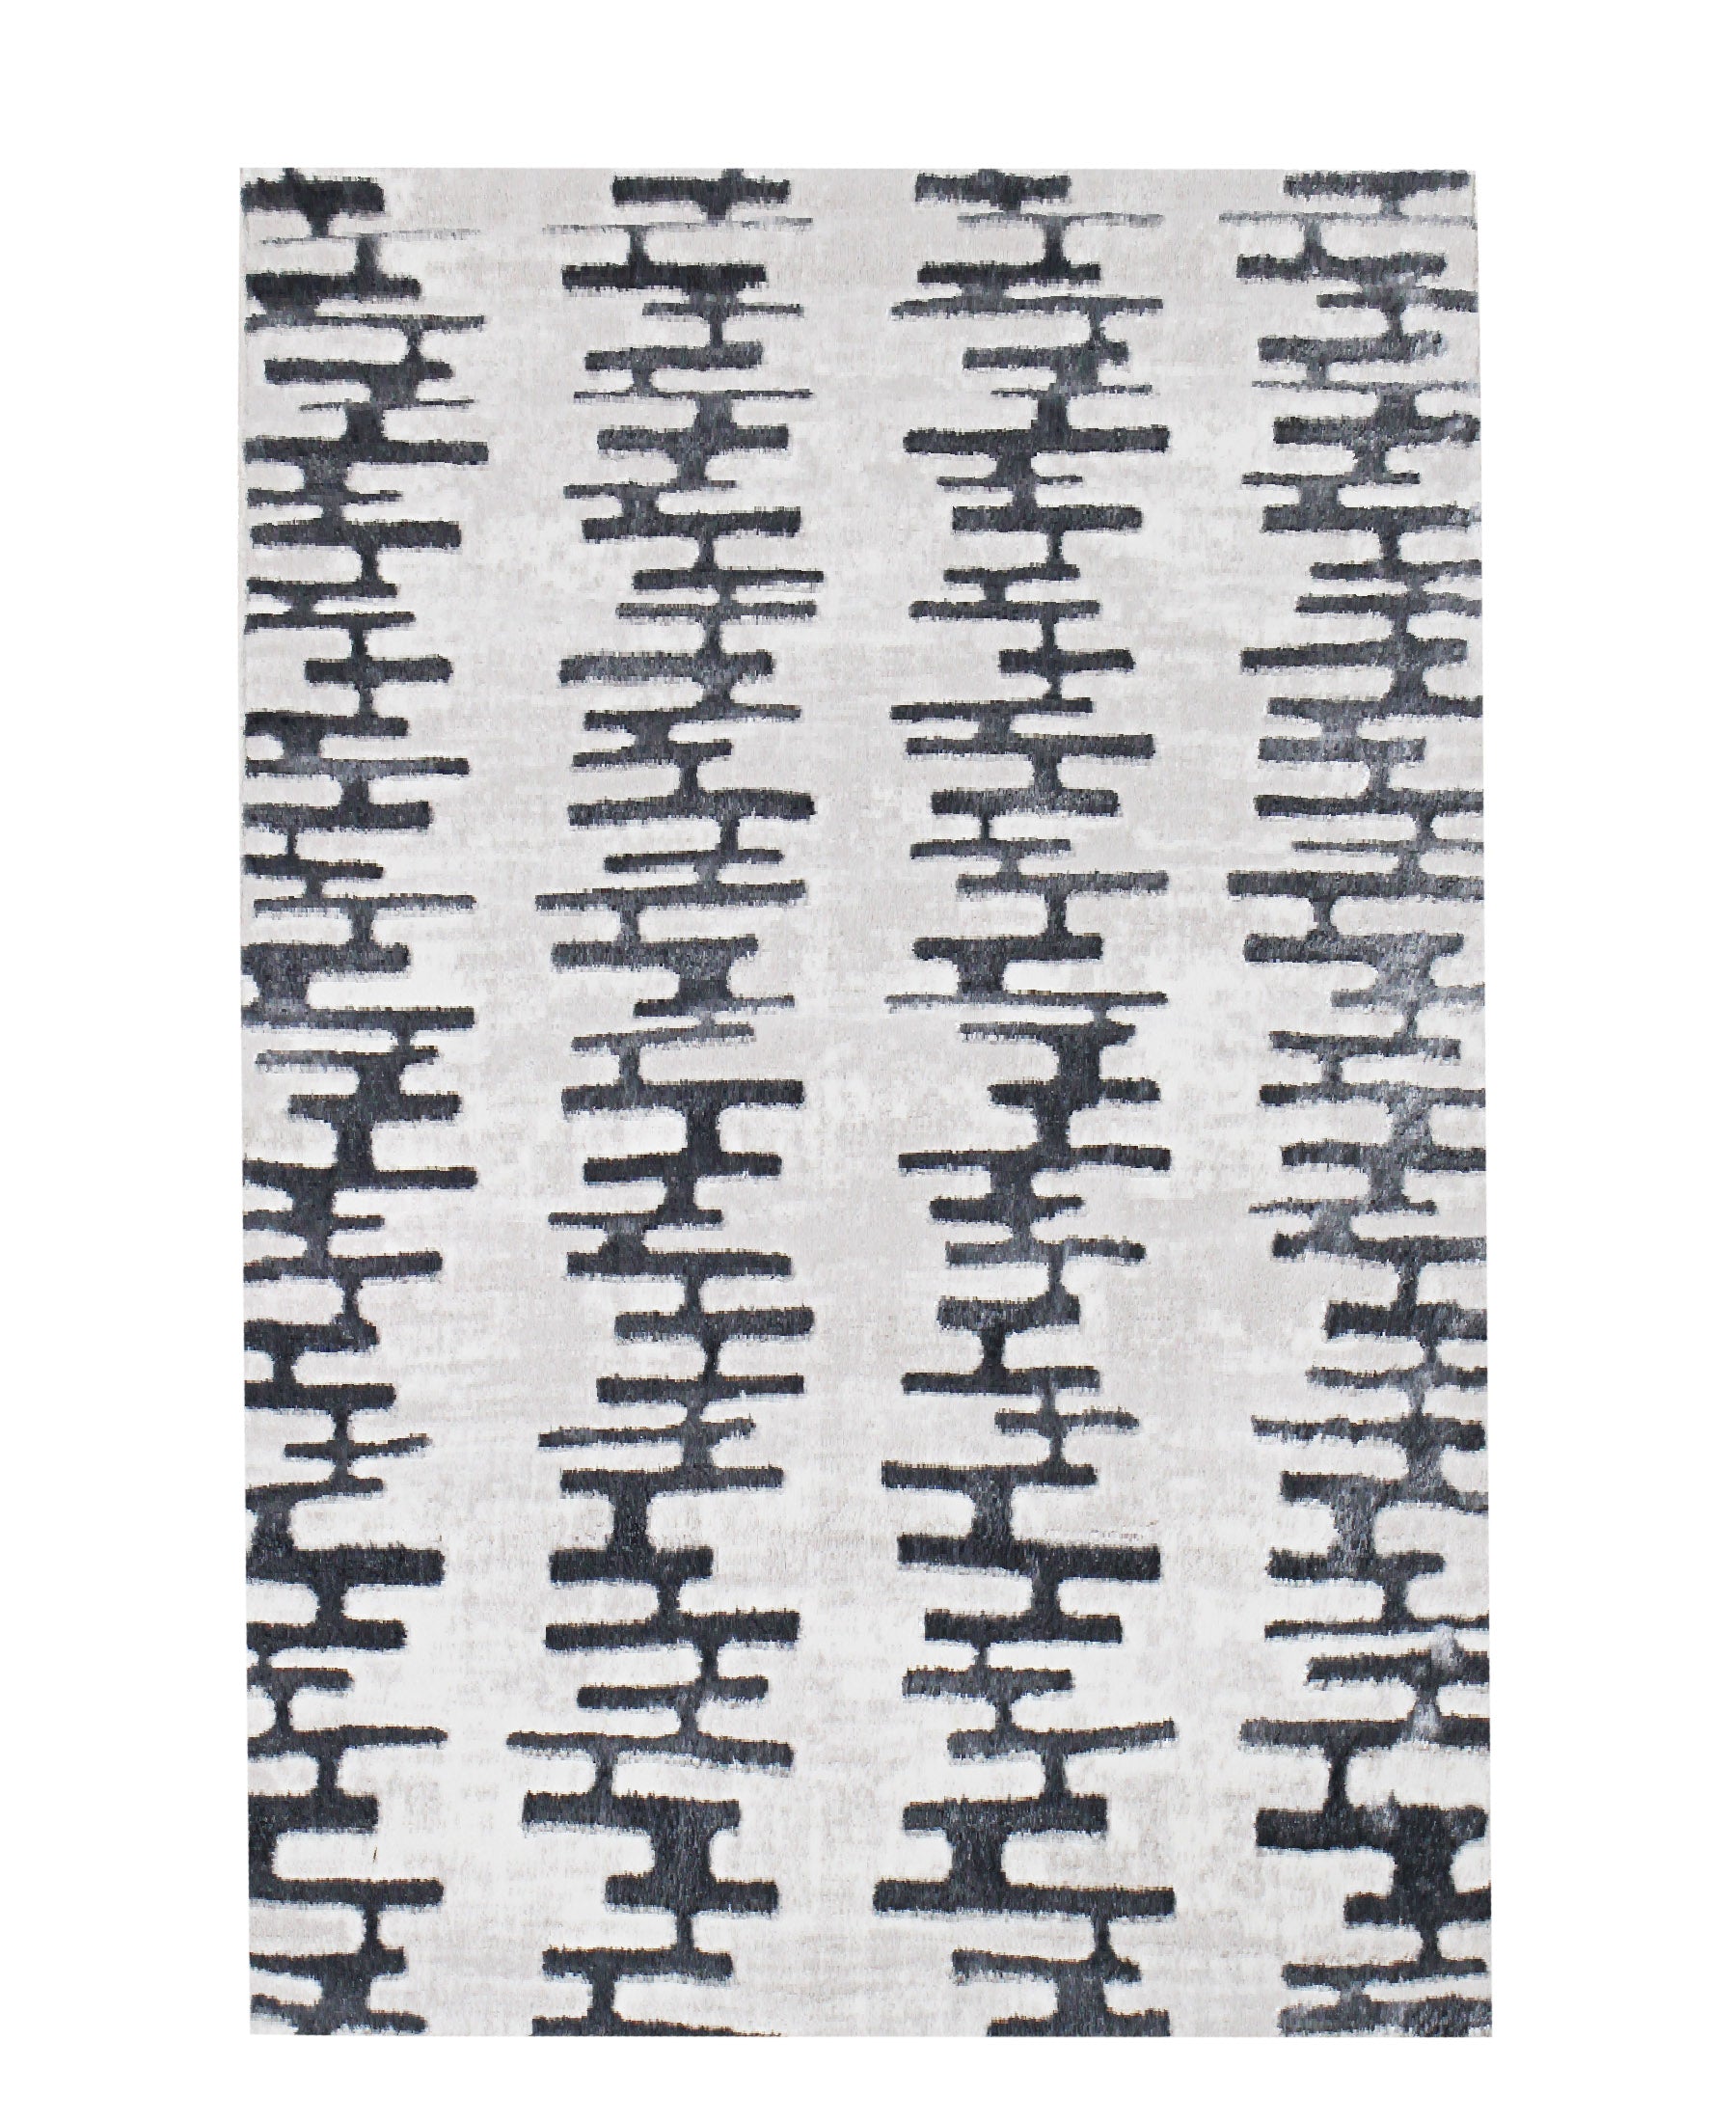 Konya Jagged Carpet 1200mm X 1700mm - Grey